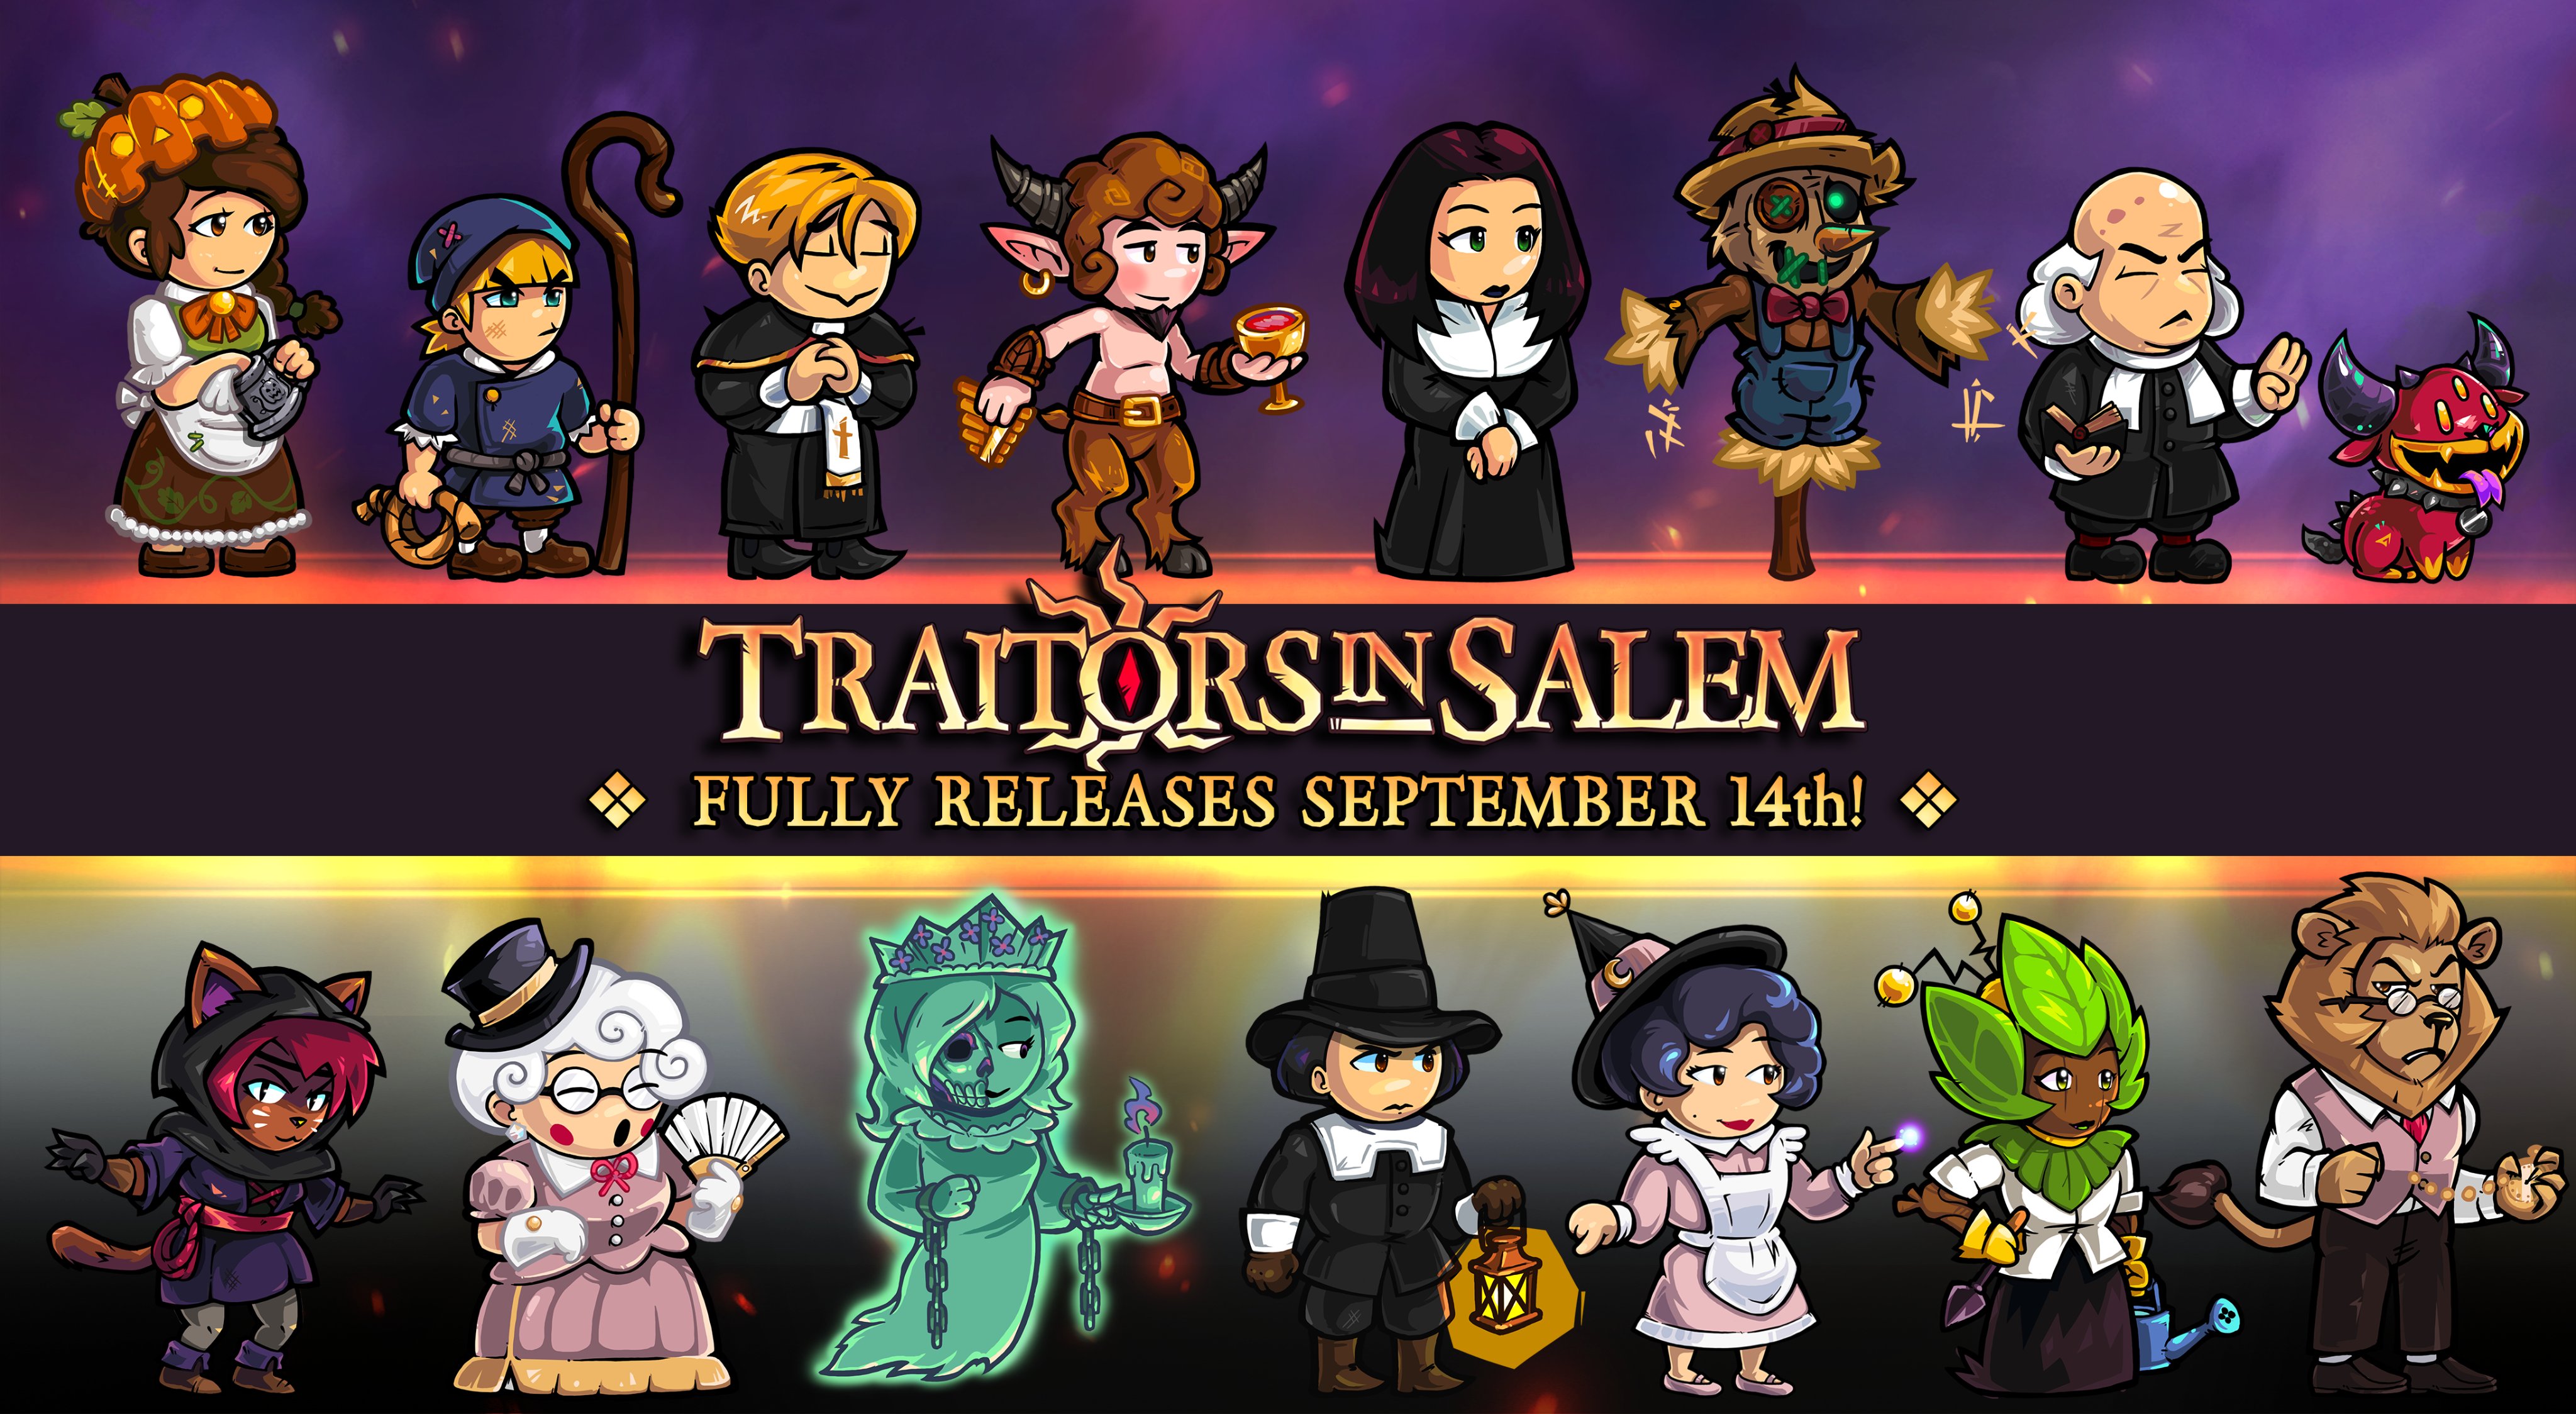 Town of Salem 2 Soundtrack on Steam